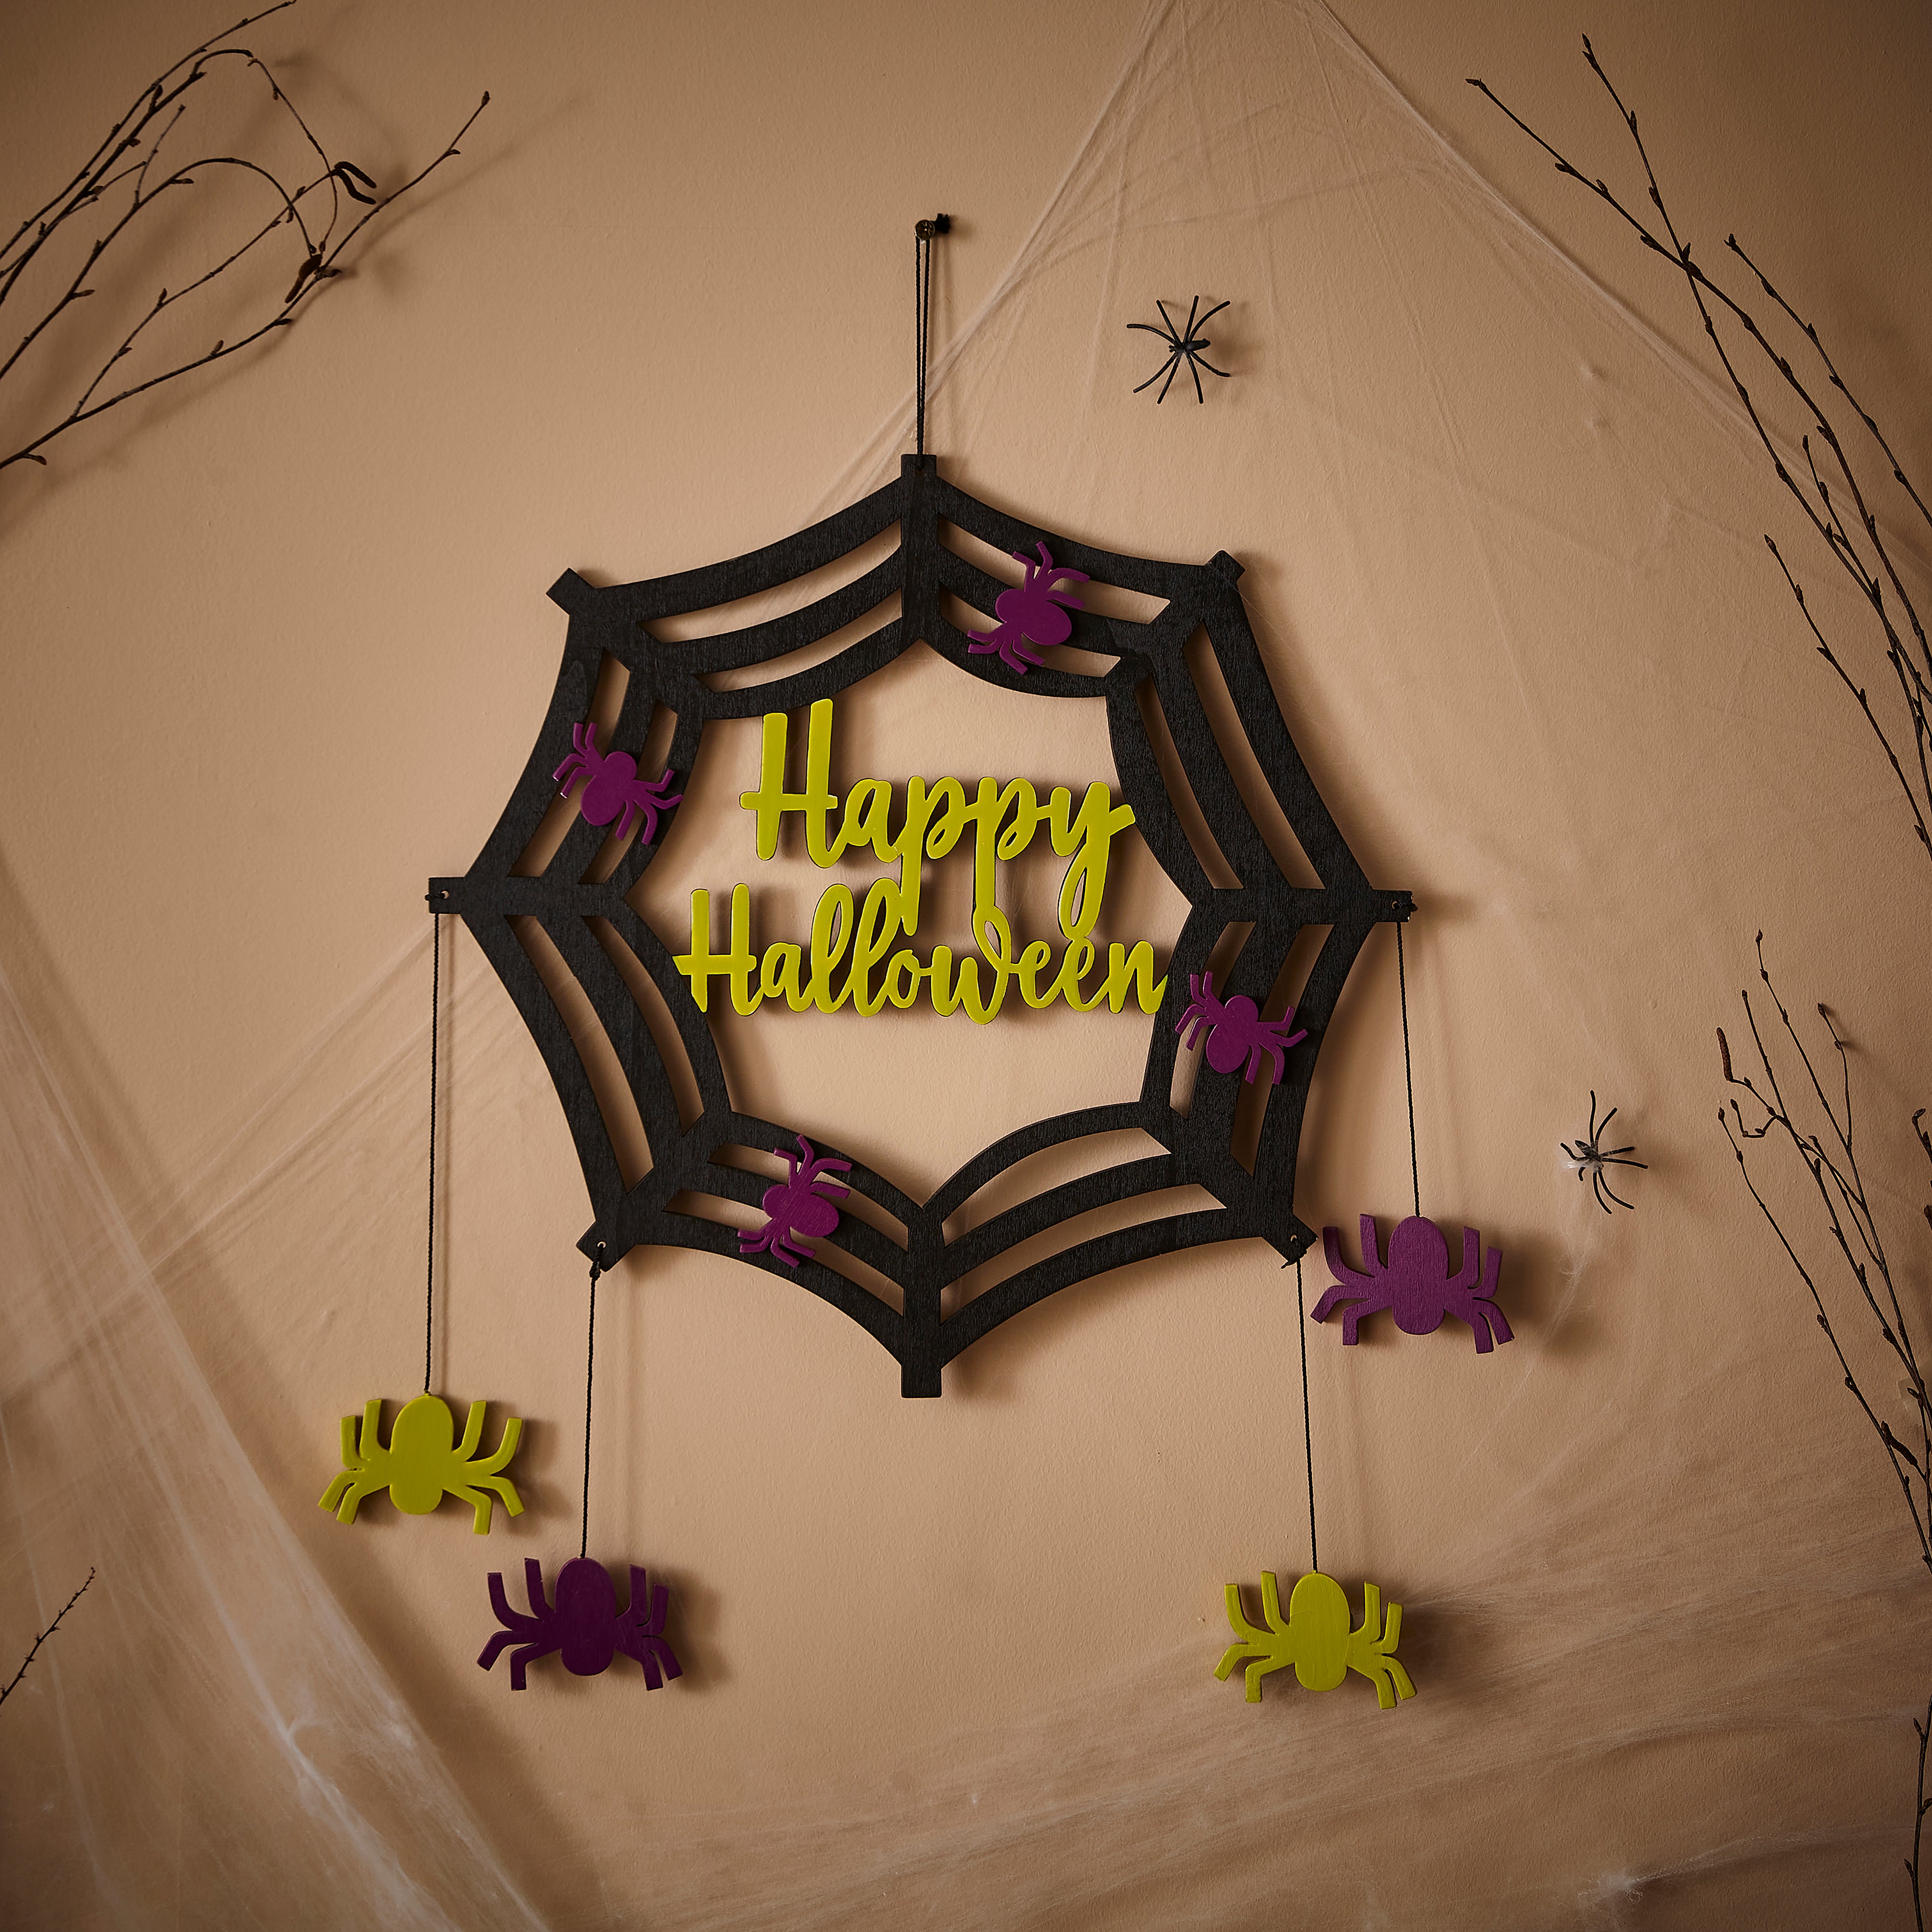 Happy Halloween Wreath with Spiders